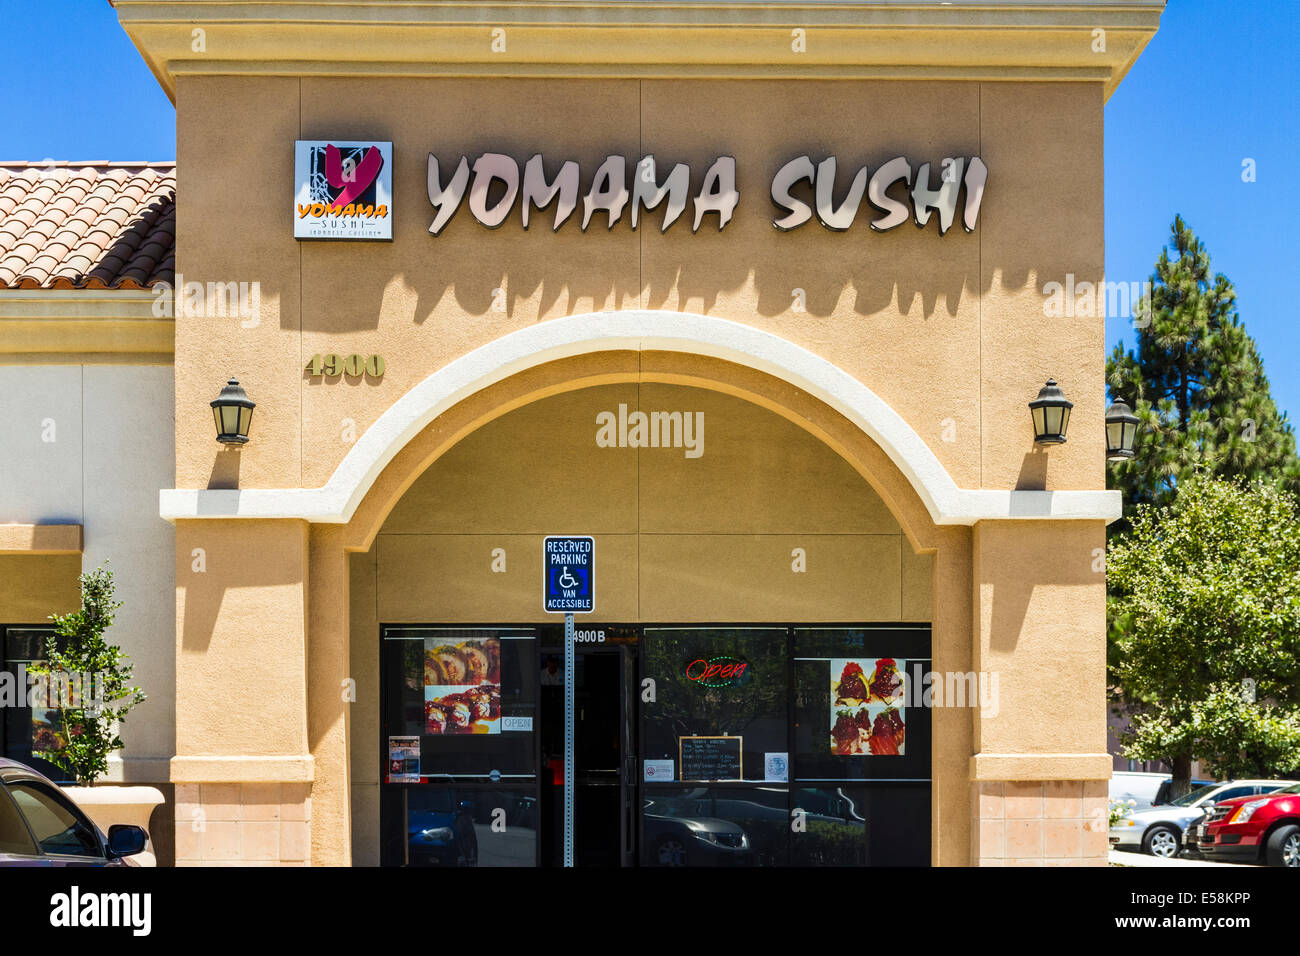 A restaurant called Yomama Sushi in Camarillo California USA Stock